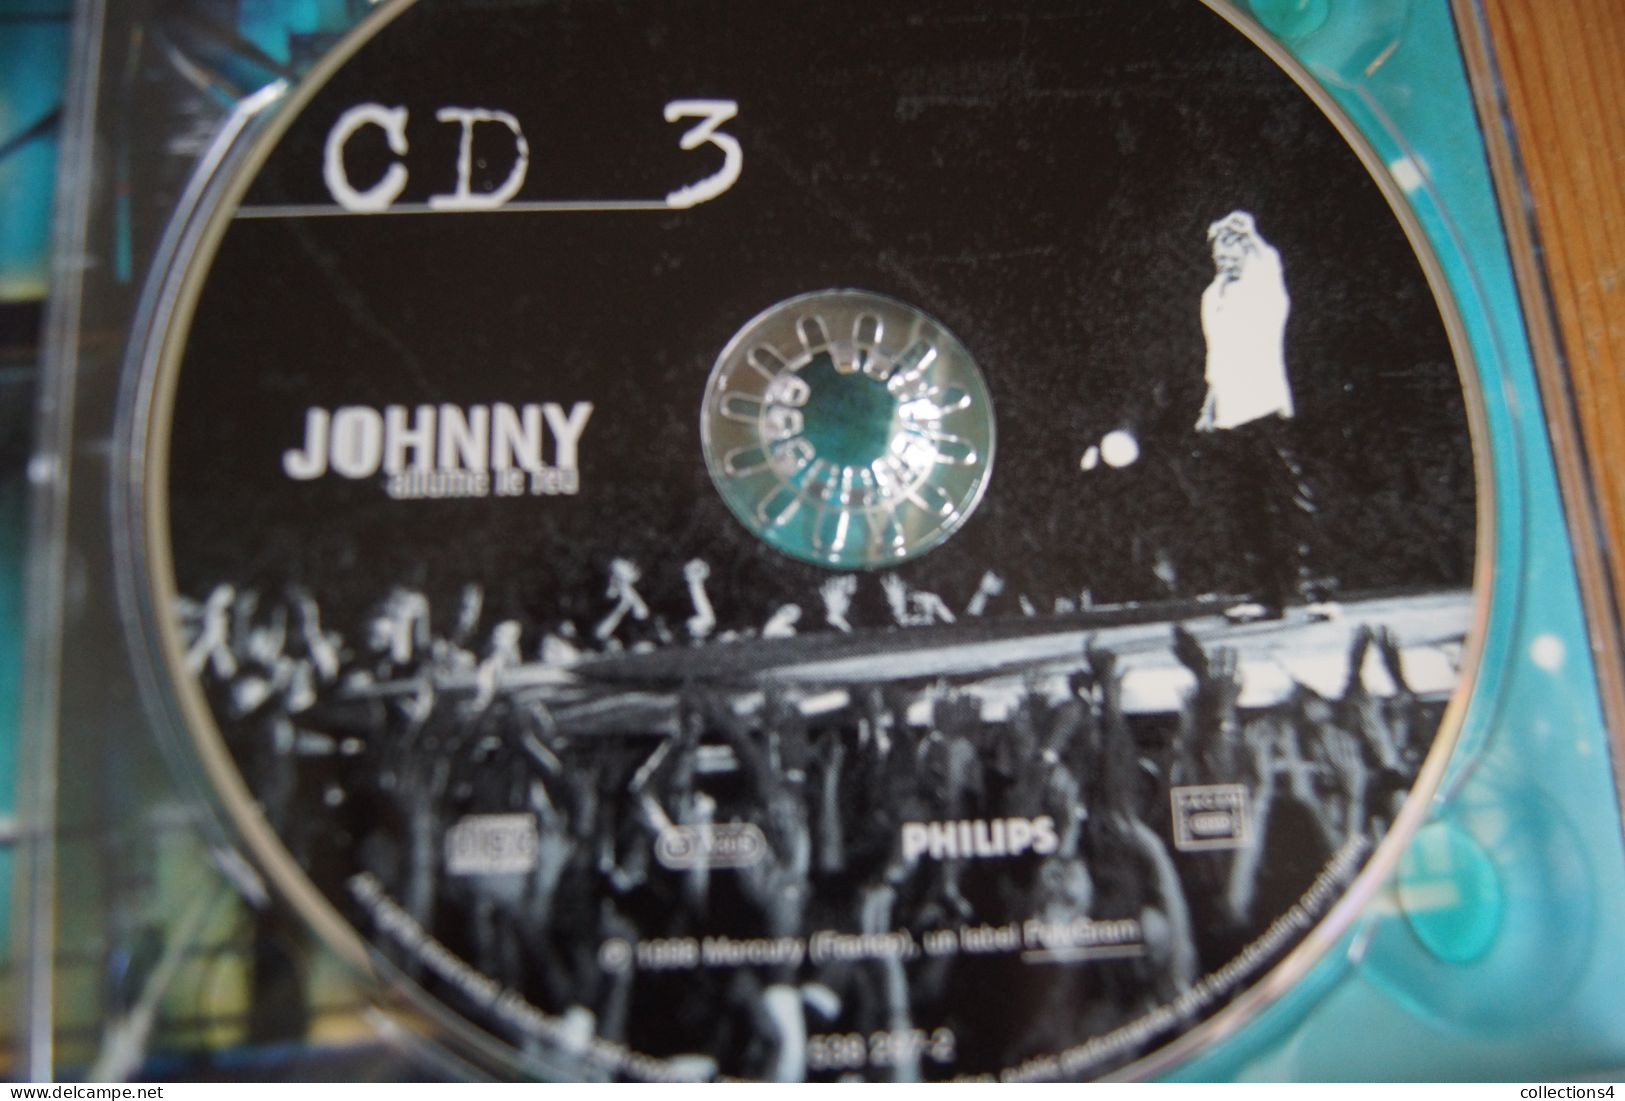 JOHNNY HALLYDAY ALLUME LE FEU STADE DE FRANCE 98 COFFRET EN 3 CD 3 CD NUMEROTE VALEUR++ GOLDMAN OBISPO BRUEL PAGNY